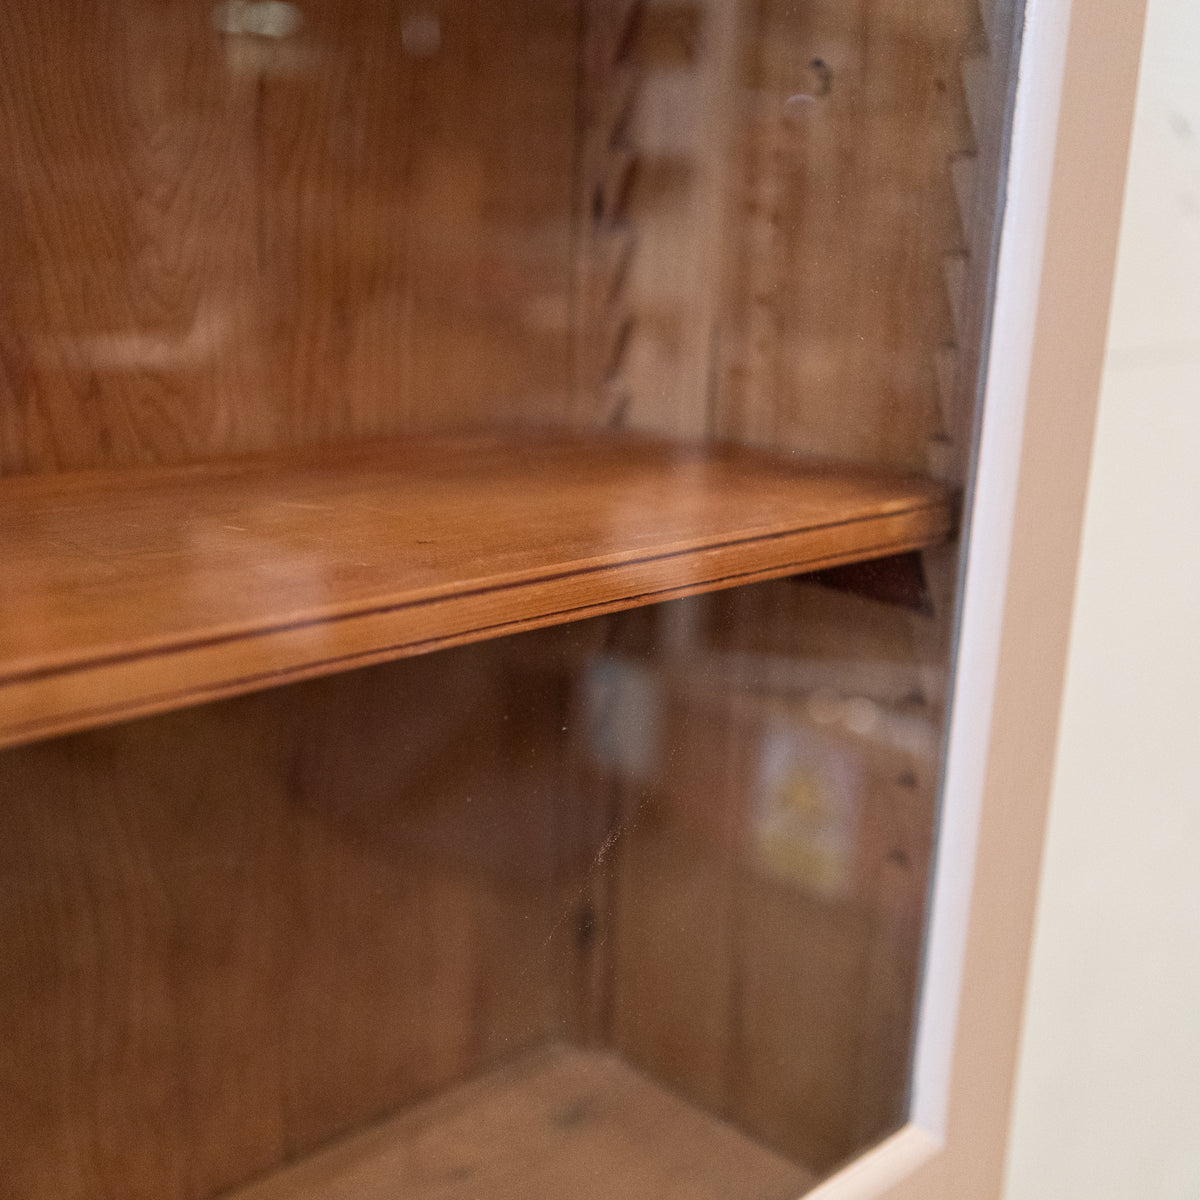 Antique Linen Press Bookcase | Dresser | The Architectural Forum